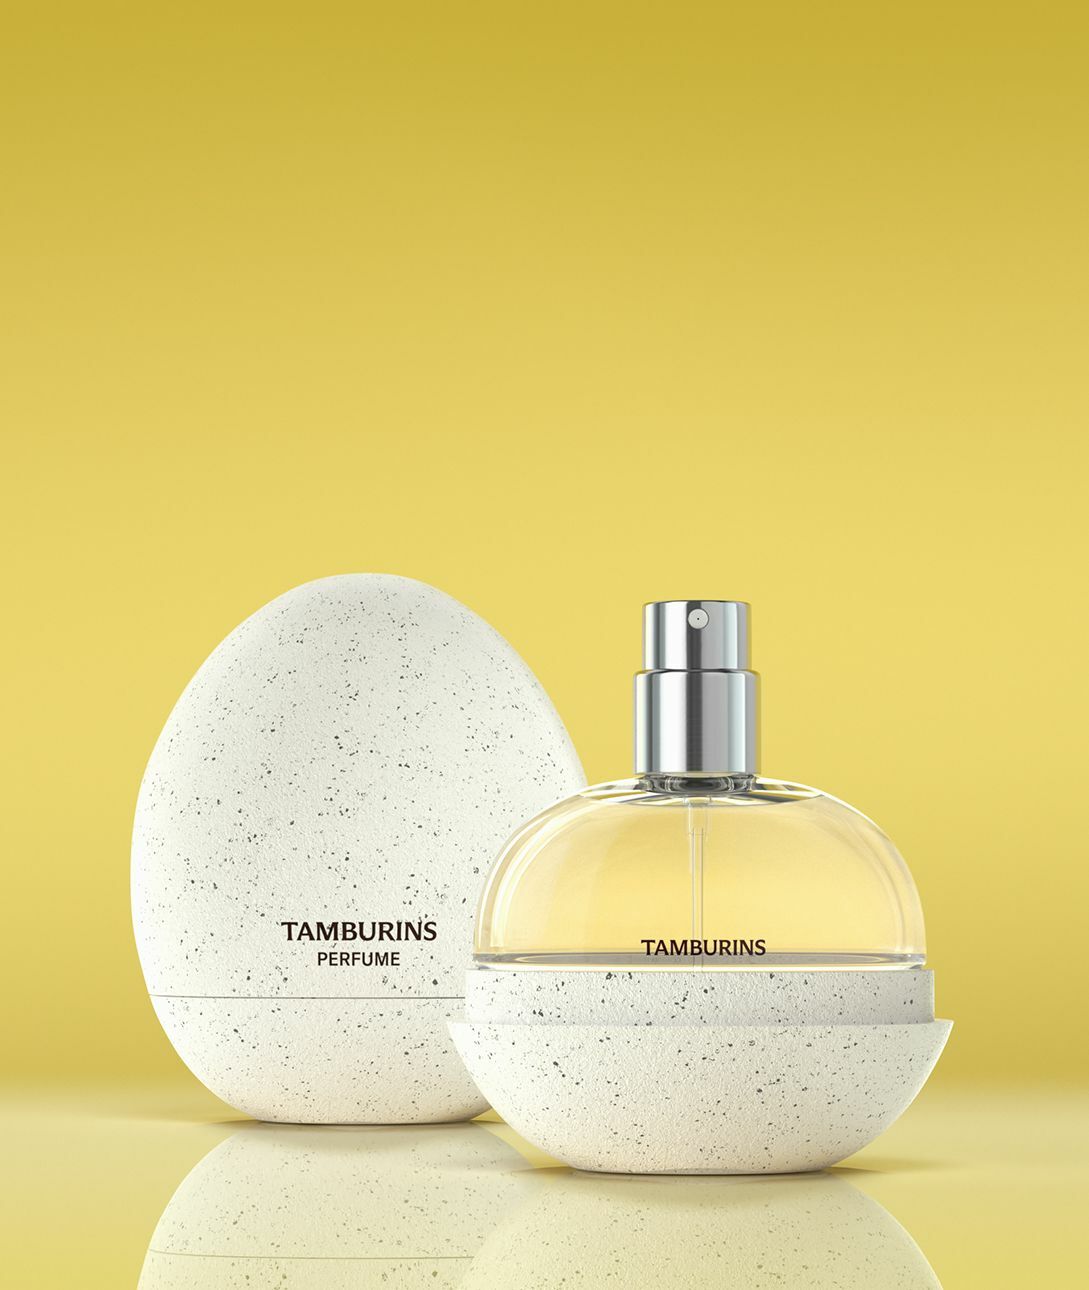 Tamburins Perfume - WOOD SALT BEACH